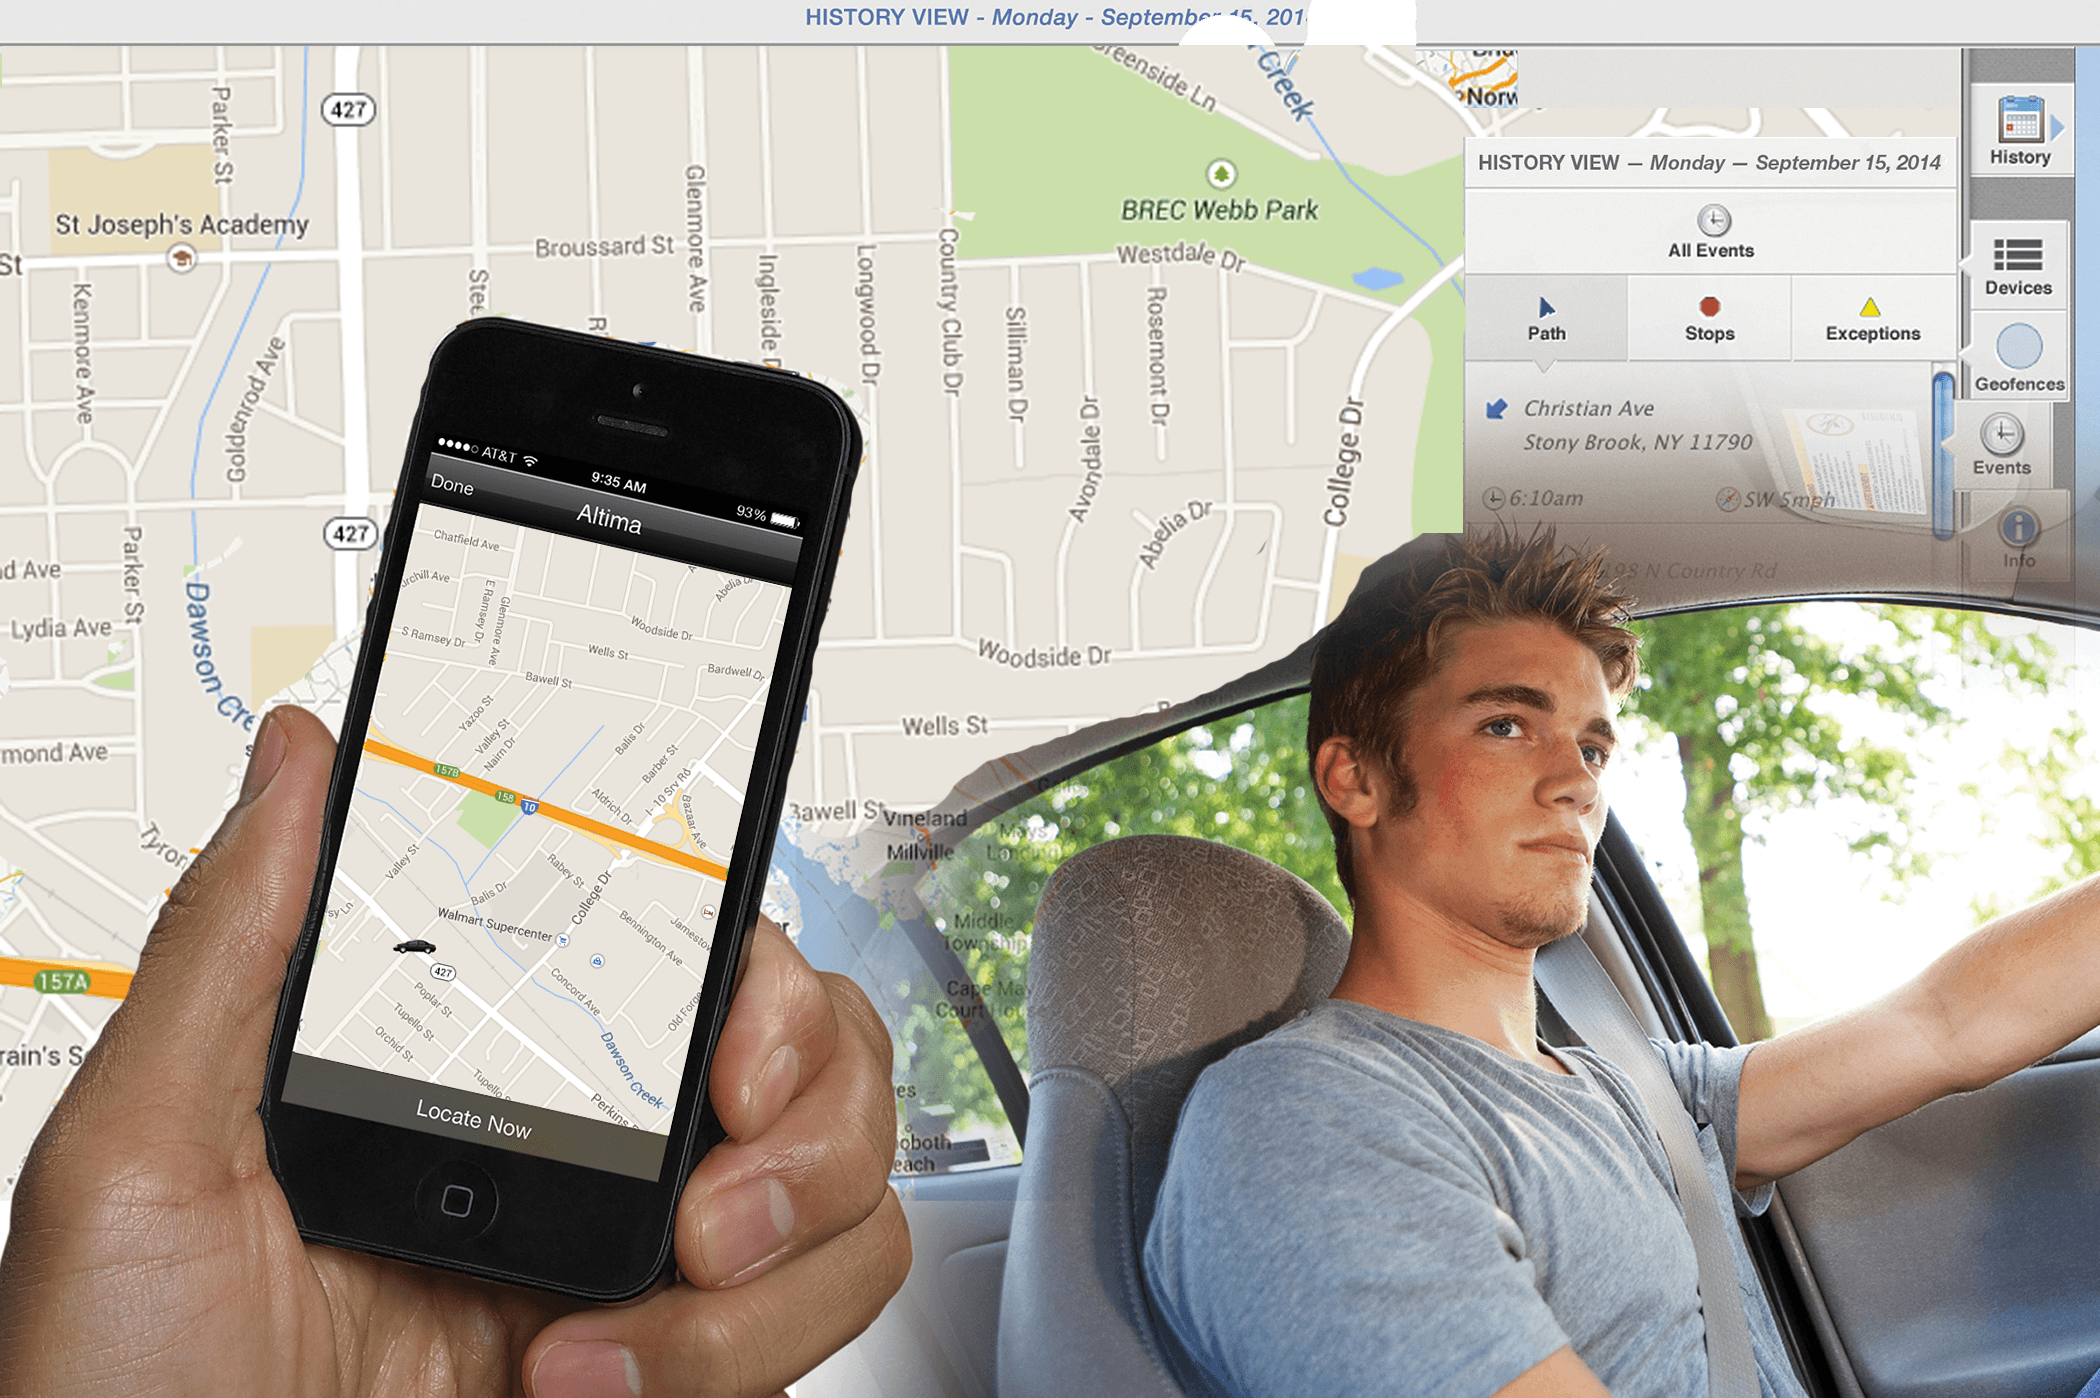 vehicle tracking app on phone